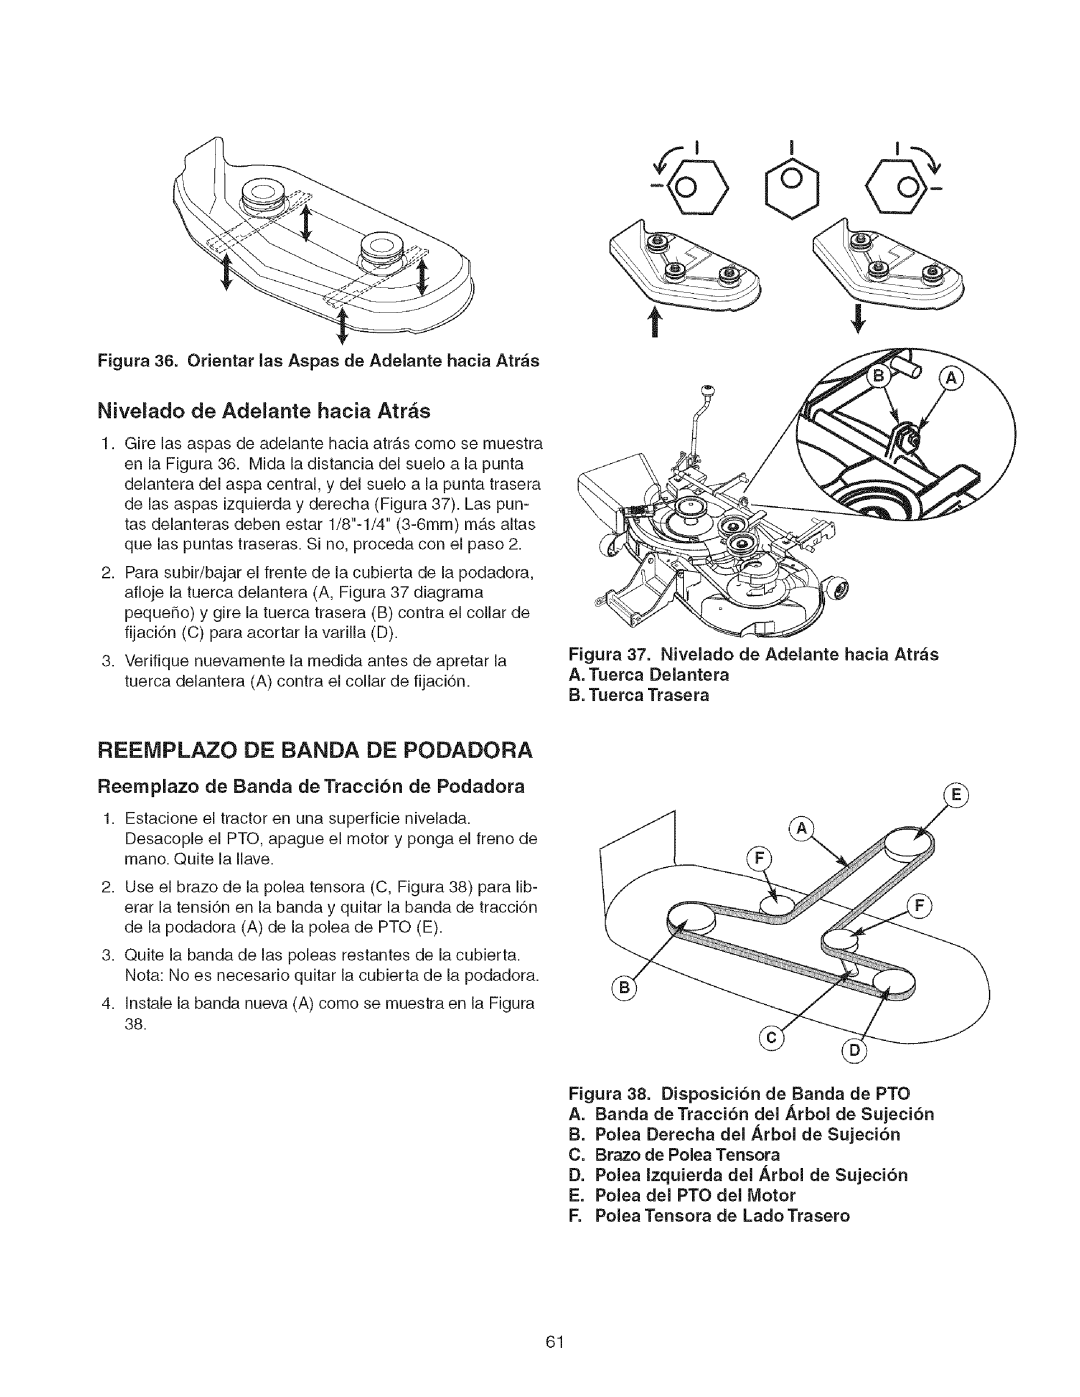 Craftsman 107.27768 manual Reemplazo De Banda De Podadora, Nivelado de Adelante hacia Atr_s, B. Tuerca Trasera 